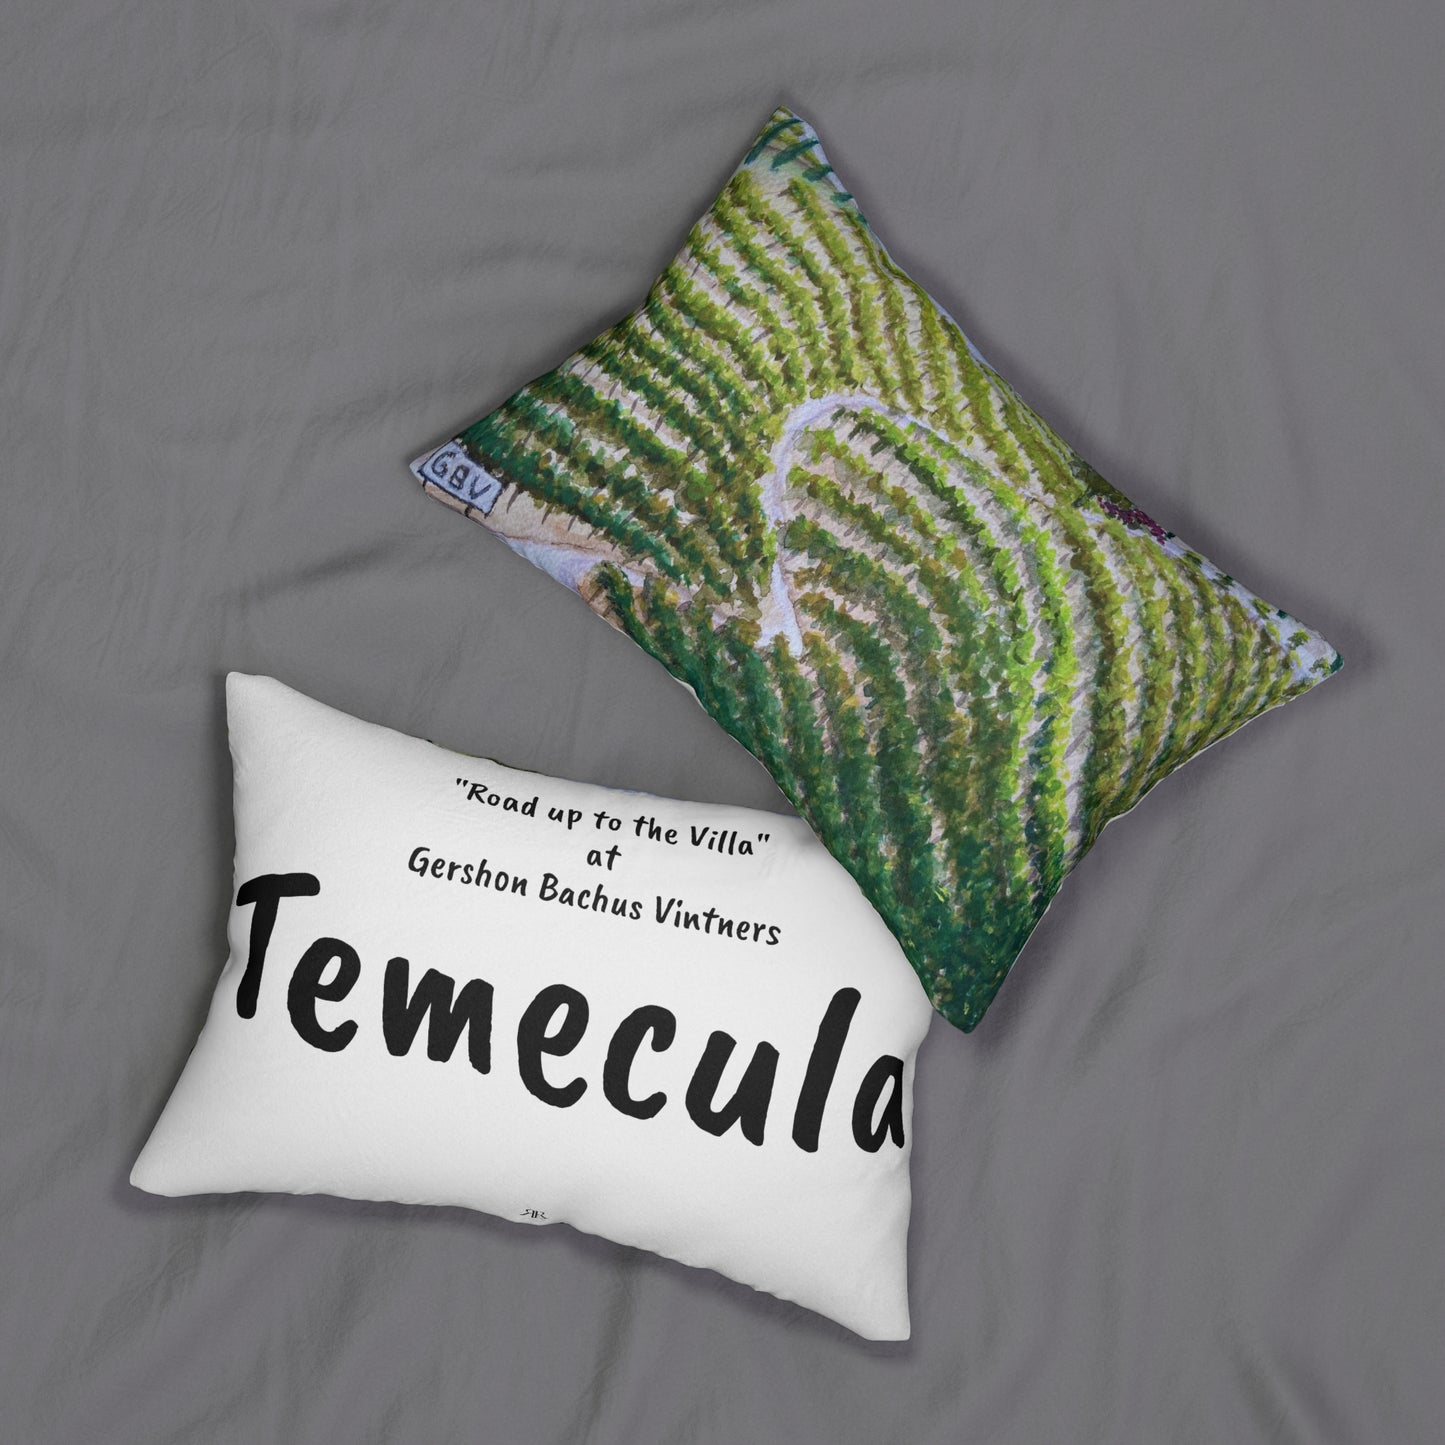 Temecula Lumbar Pillow featuring "Road up to the Villa" at Gershon Bachus Vintners painting and "Temecula"